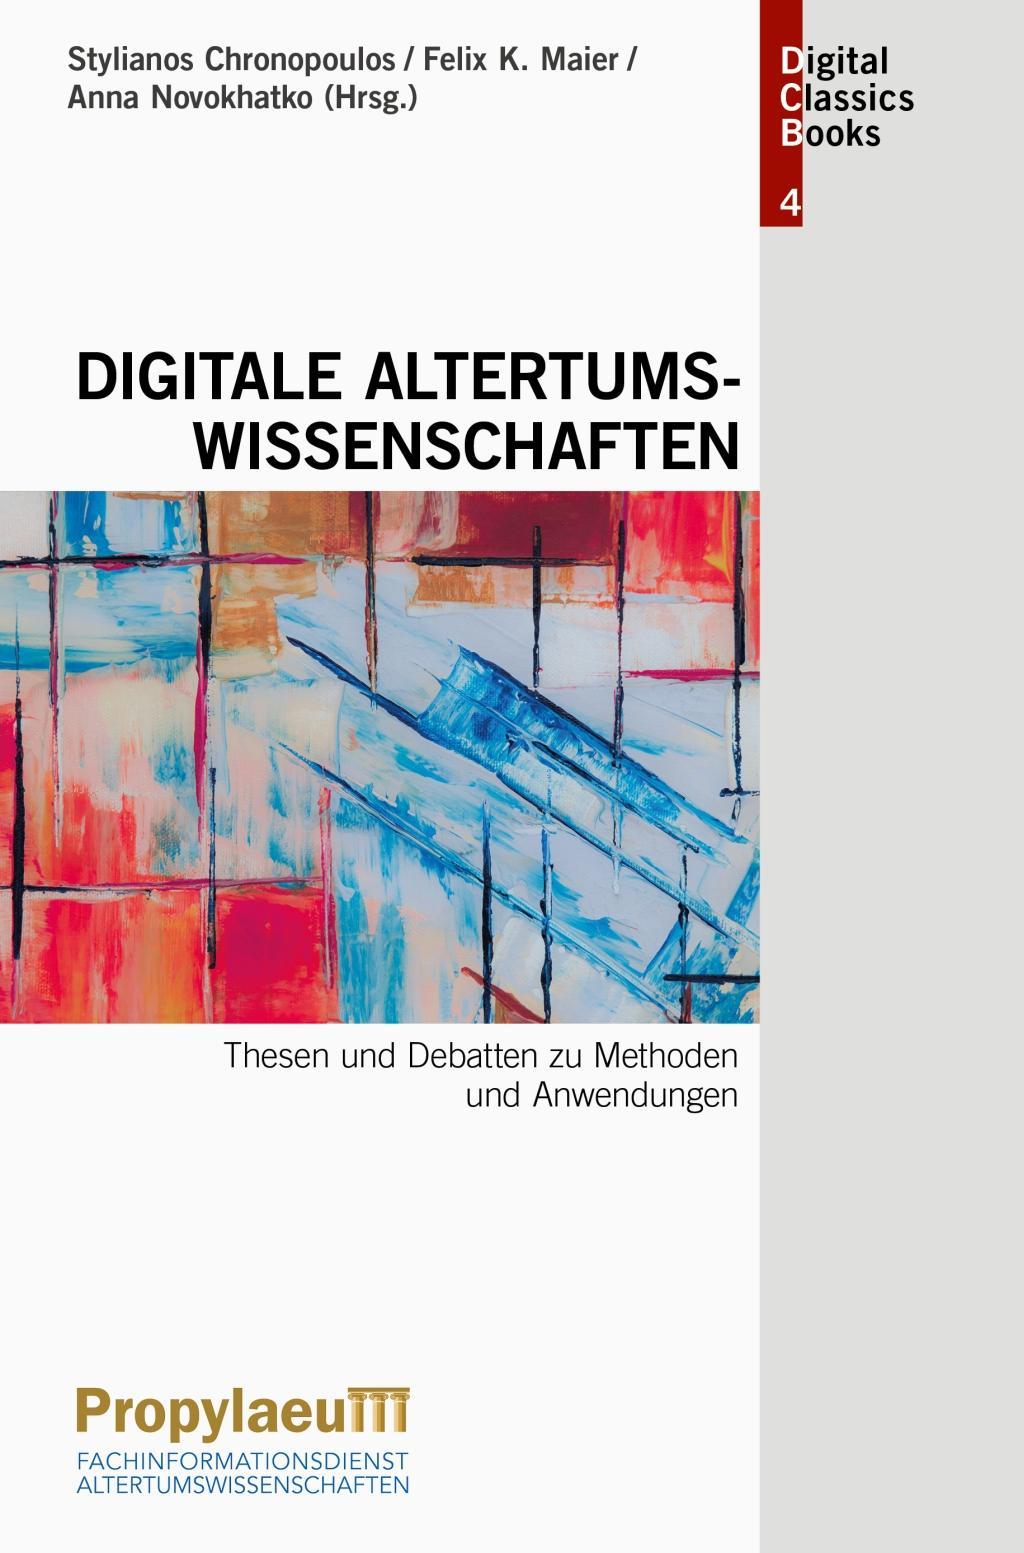 Digitale Altertumswissenschaften - Chronopoulos, Stylianos|Maier, Felix K.|Novokhatko, Anna